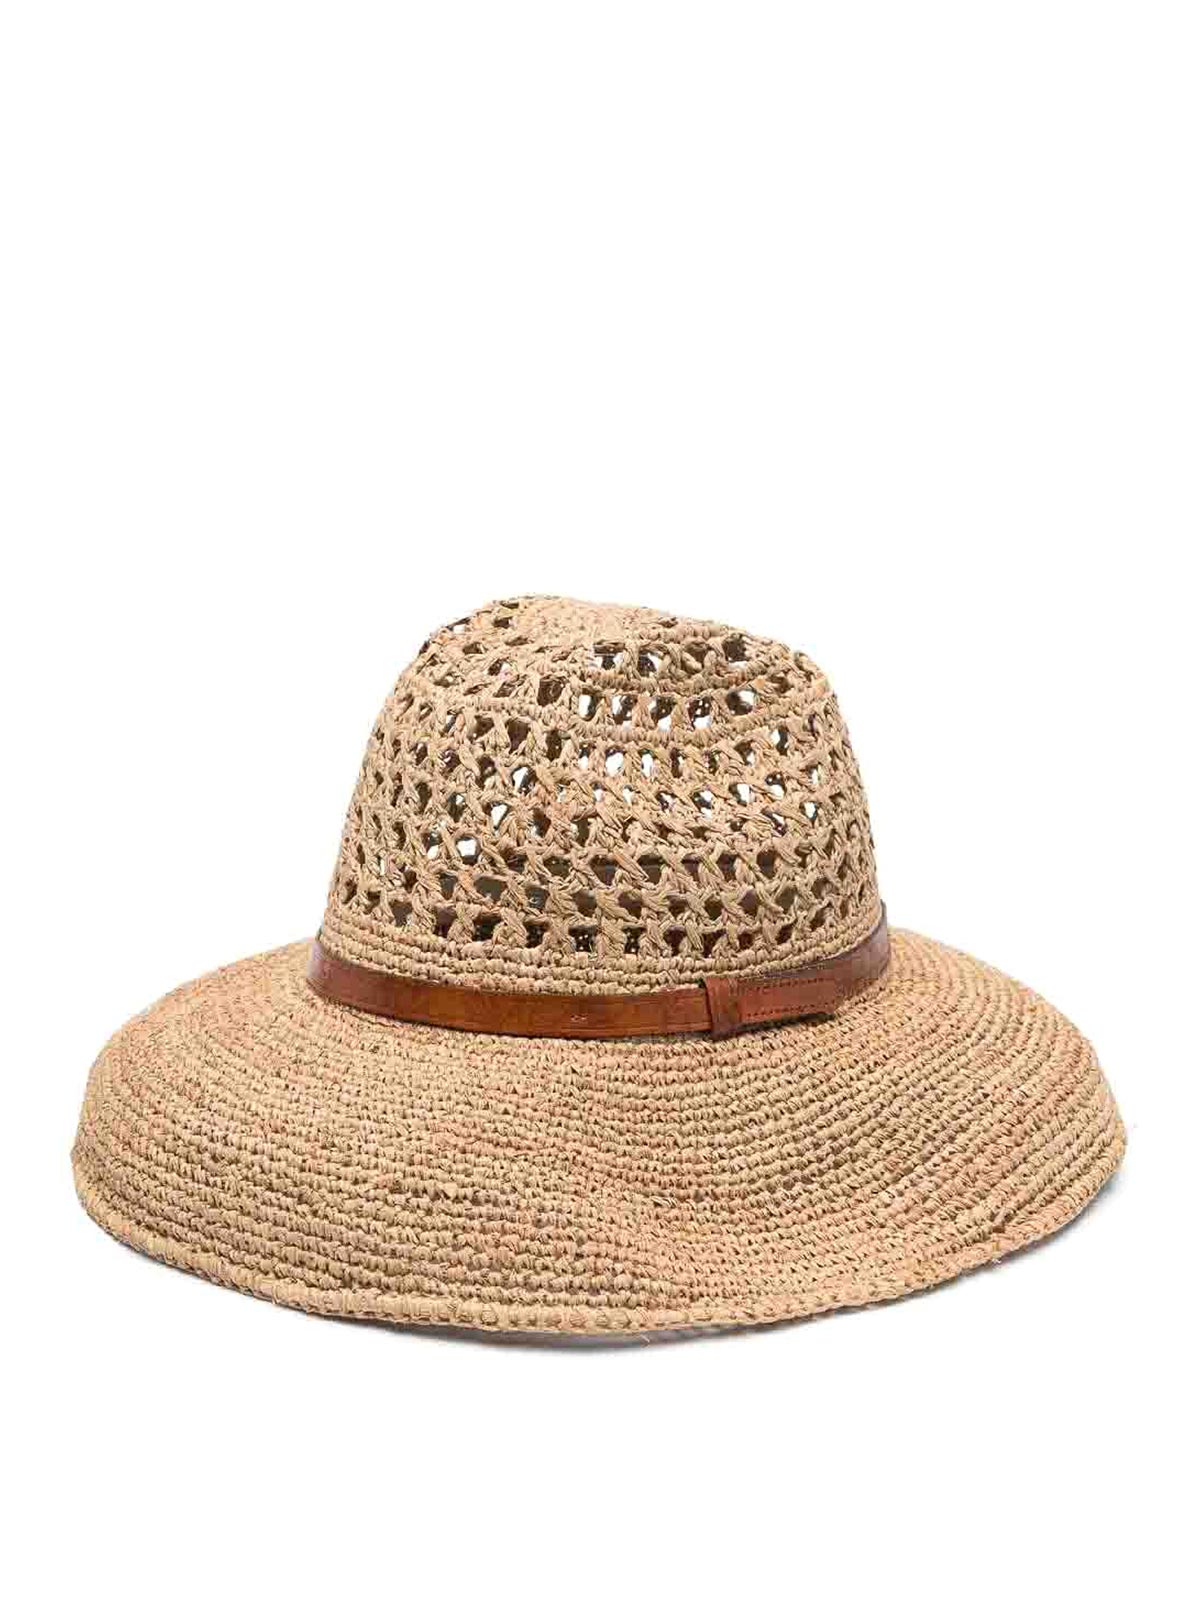 Ibeliv Peforated Hat In Brown